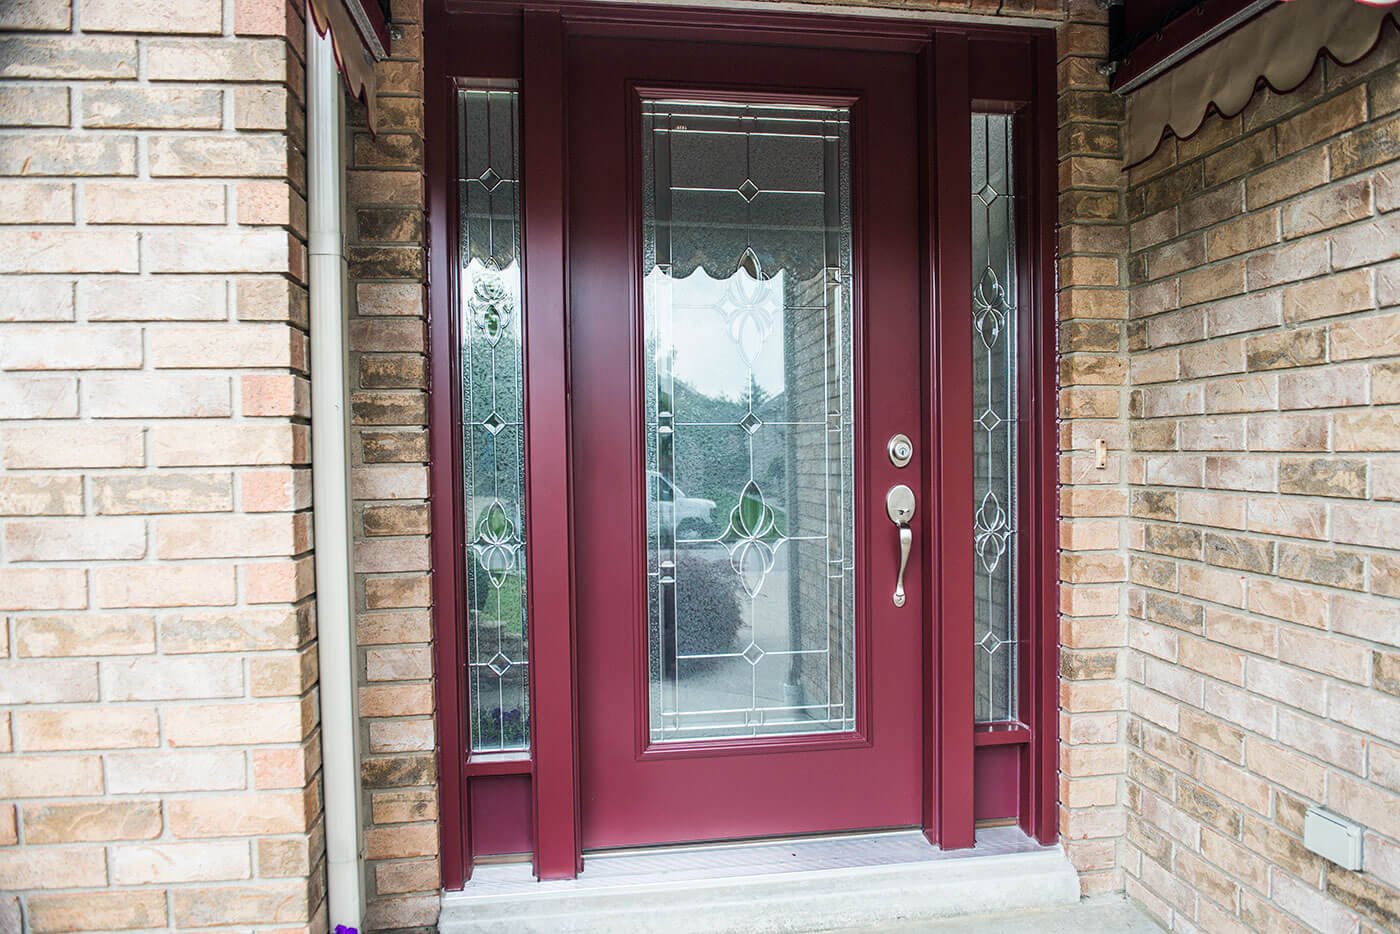 Custom Made Steel Entry Door System In Dark Red Colour and Custom Window Design